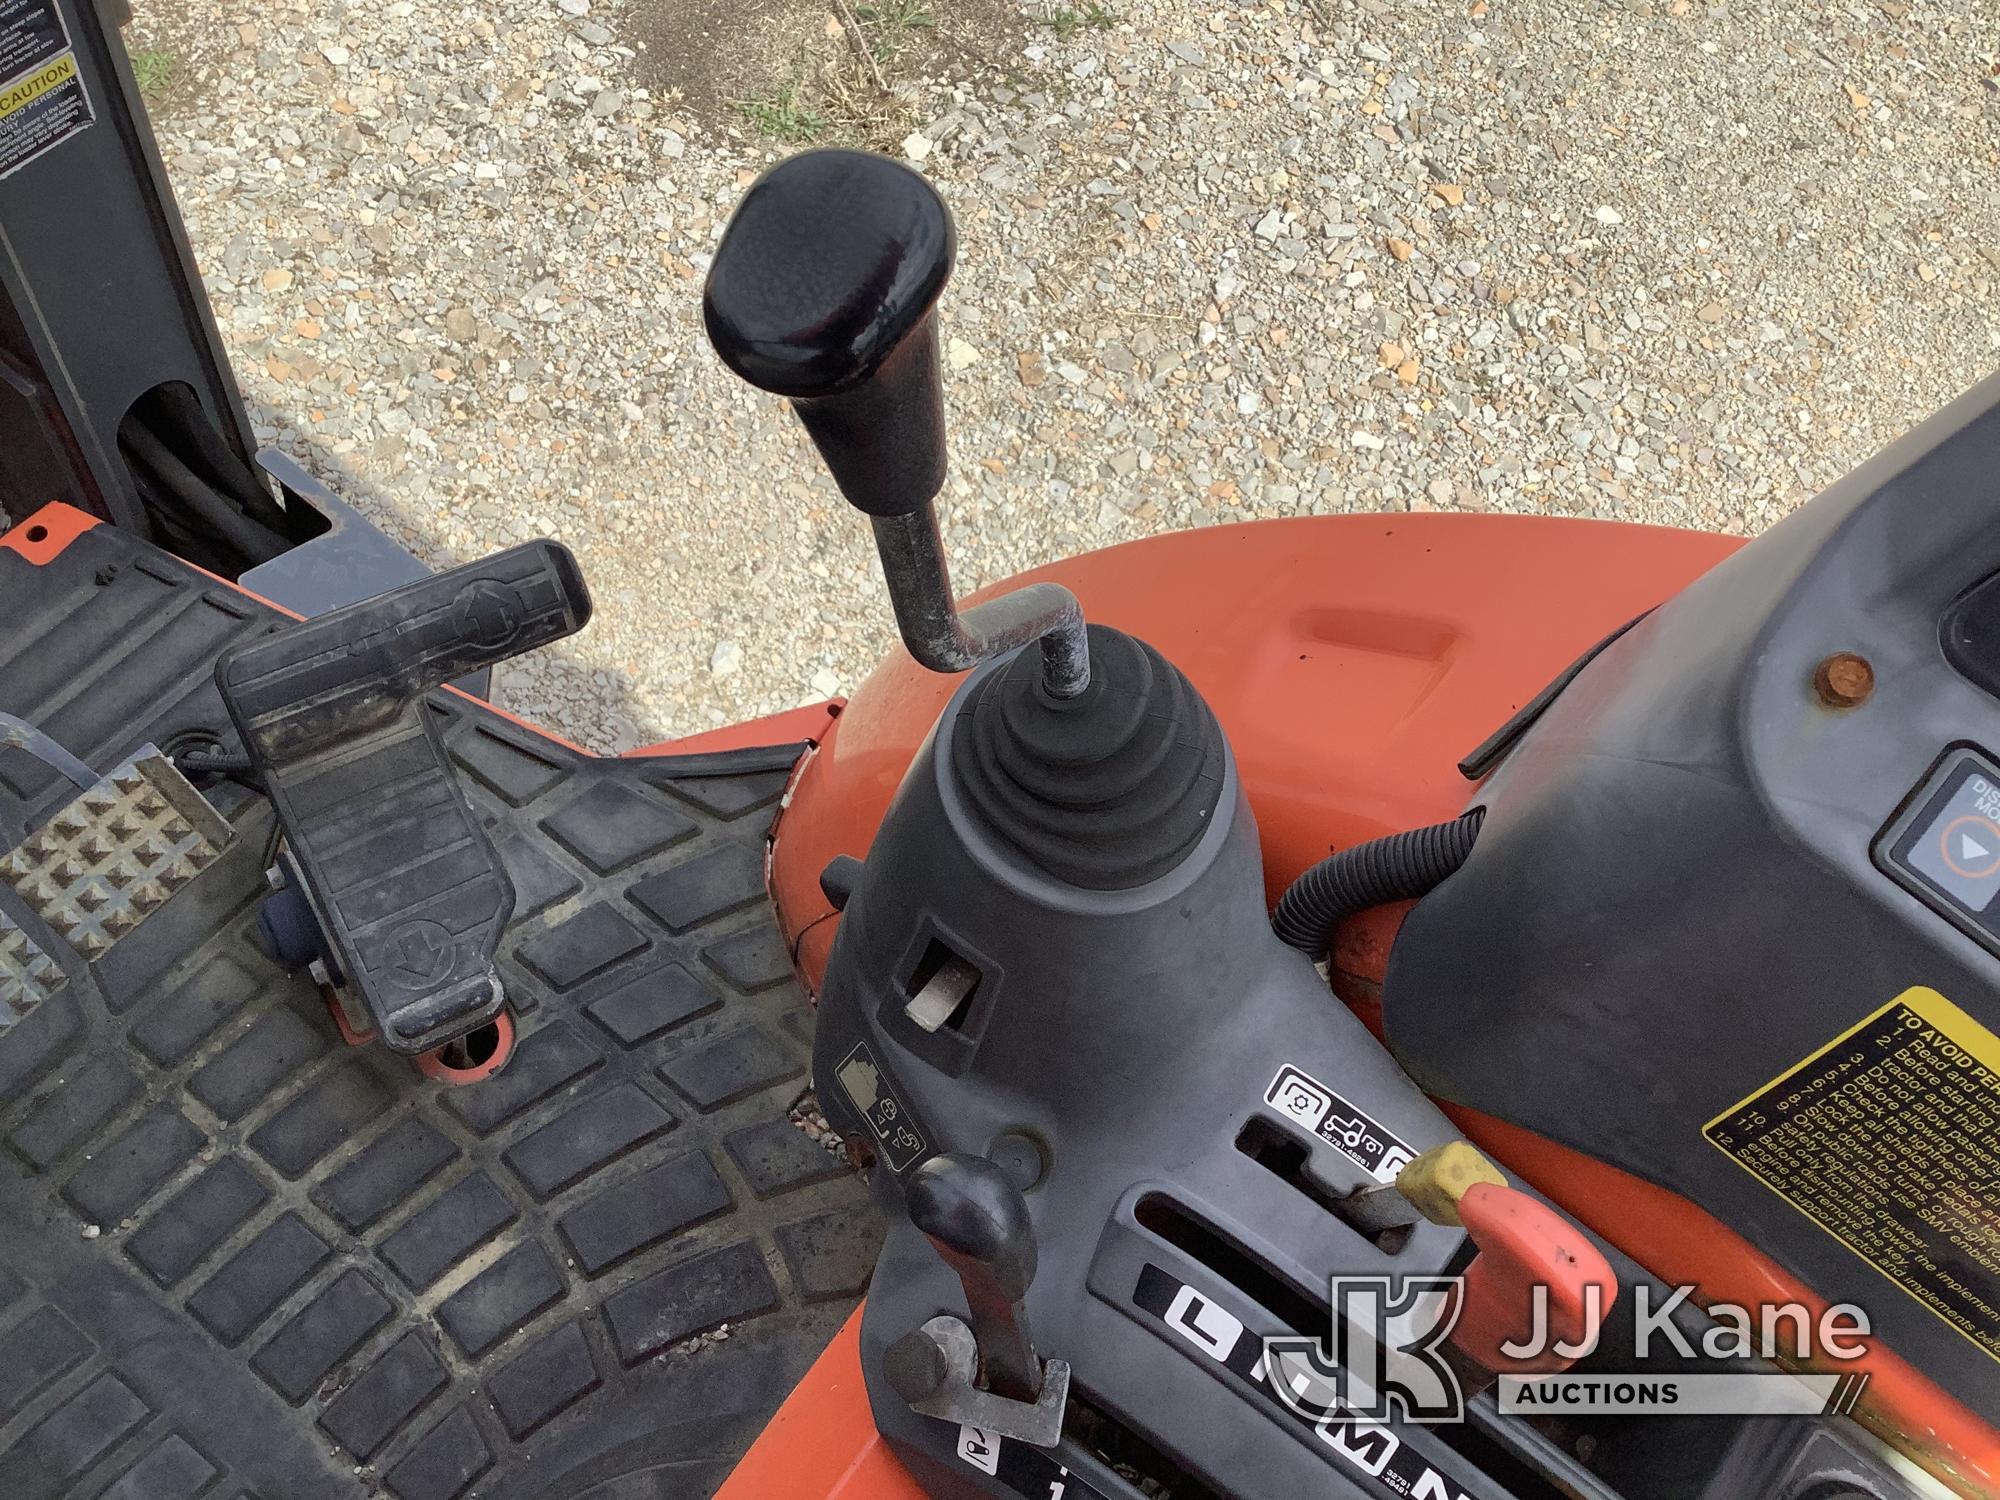 (Smock, PA) 2015 Kubota L45 Mini Tractor Loader Backhoe Runs, Moves & Operates